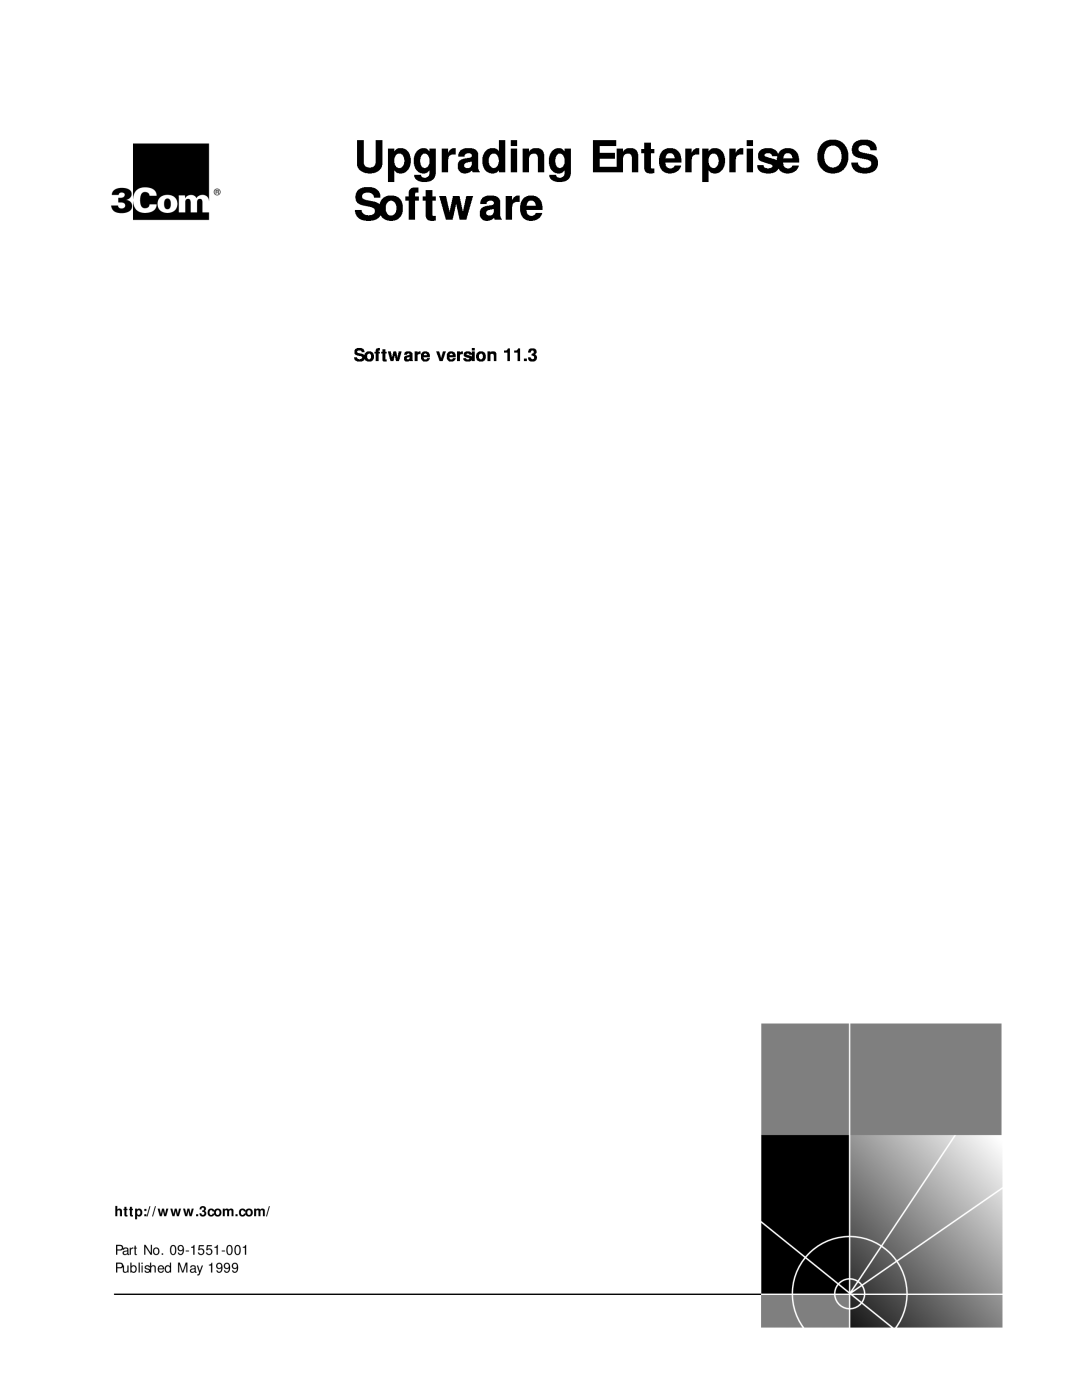 3Com ENTERPRISE OS 11.3 manual Upgrading Enterprise OS Software, Software version 